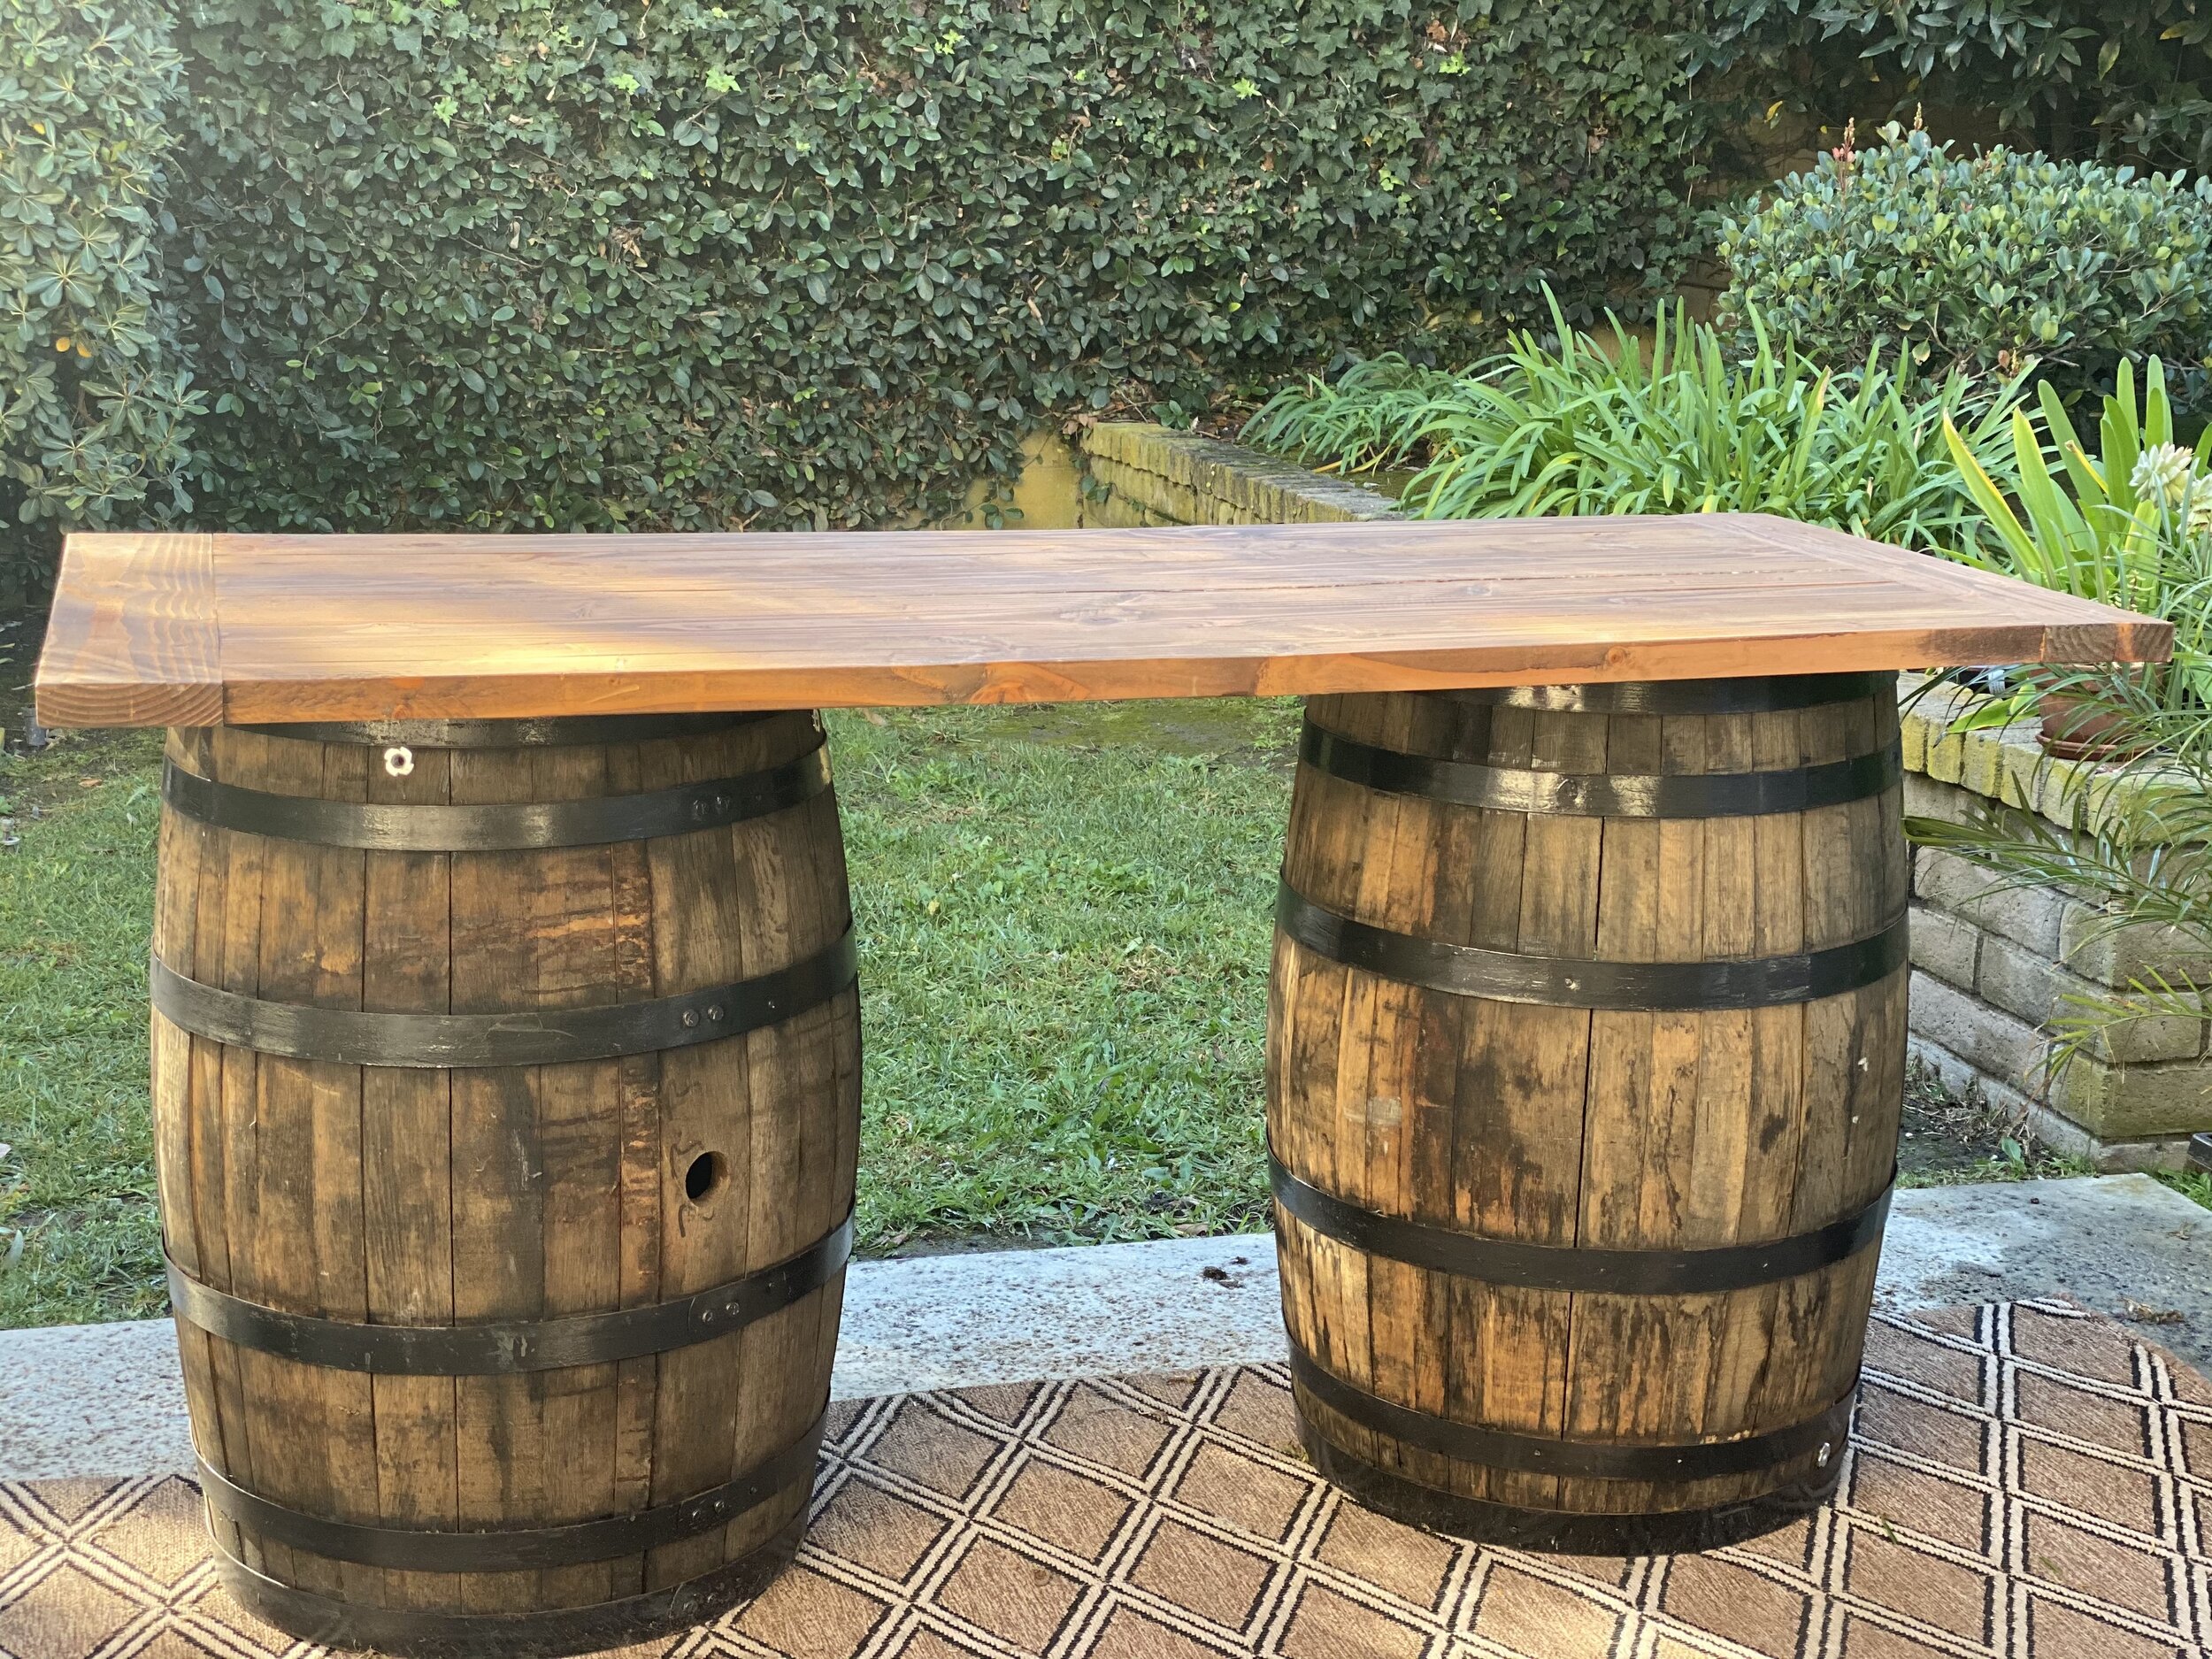 6ft Barrel Table $120